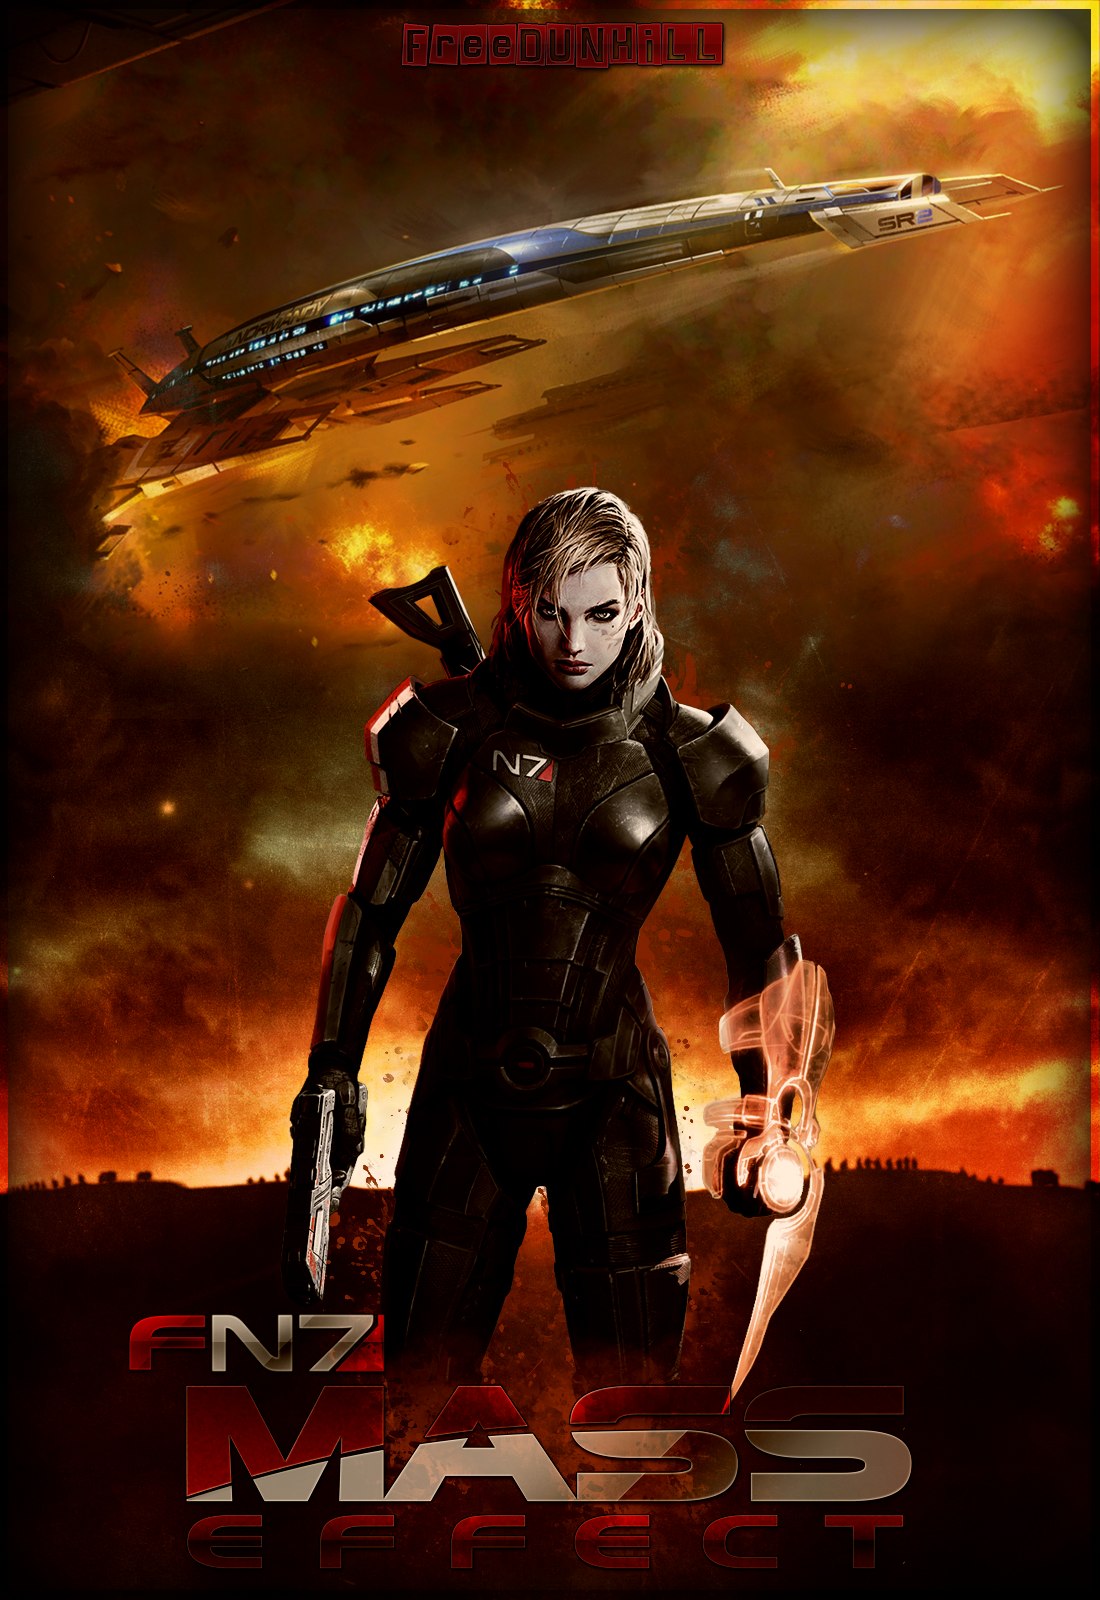 Mass Effect Female Shepard by FREEDUNHILL on DeviantArt